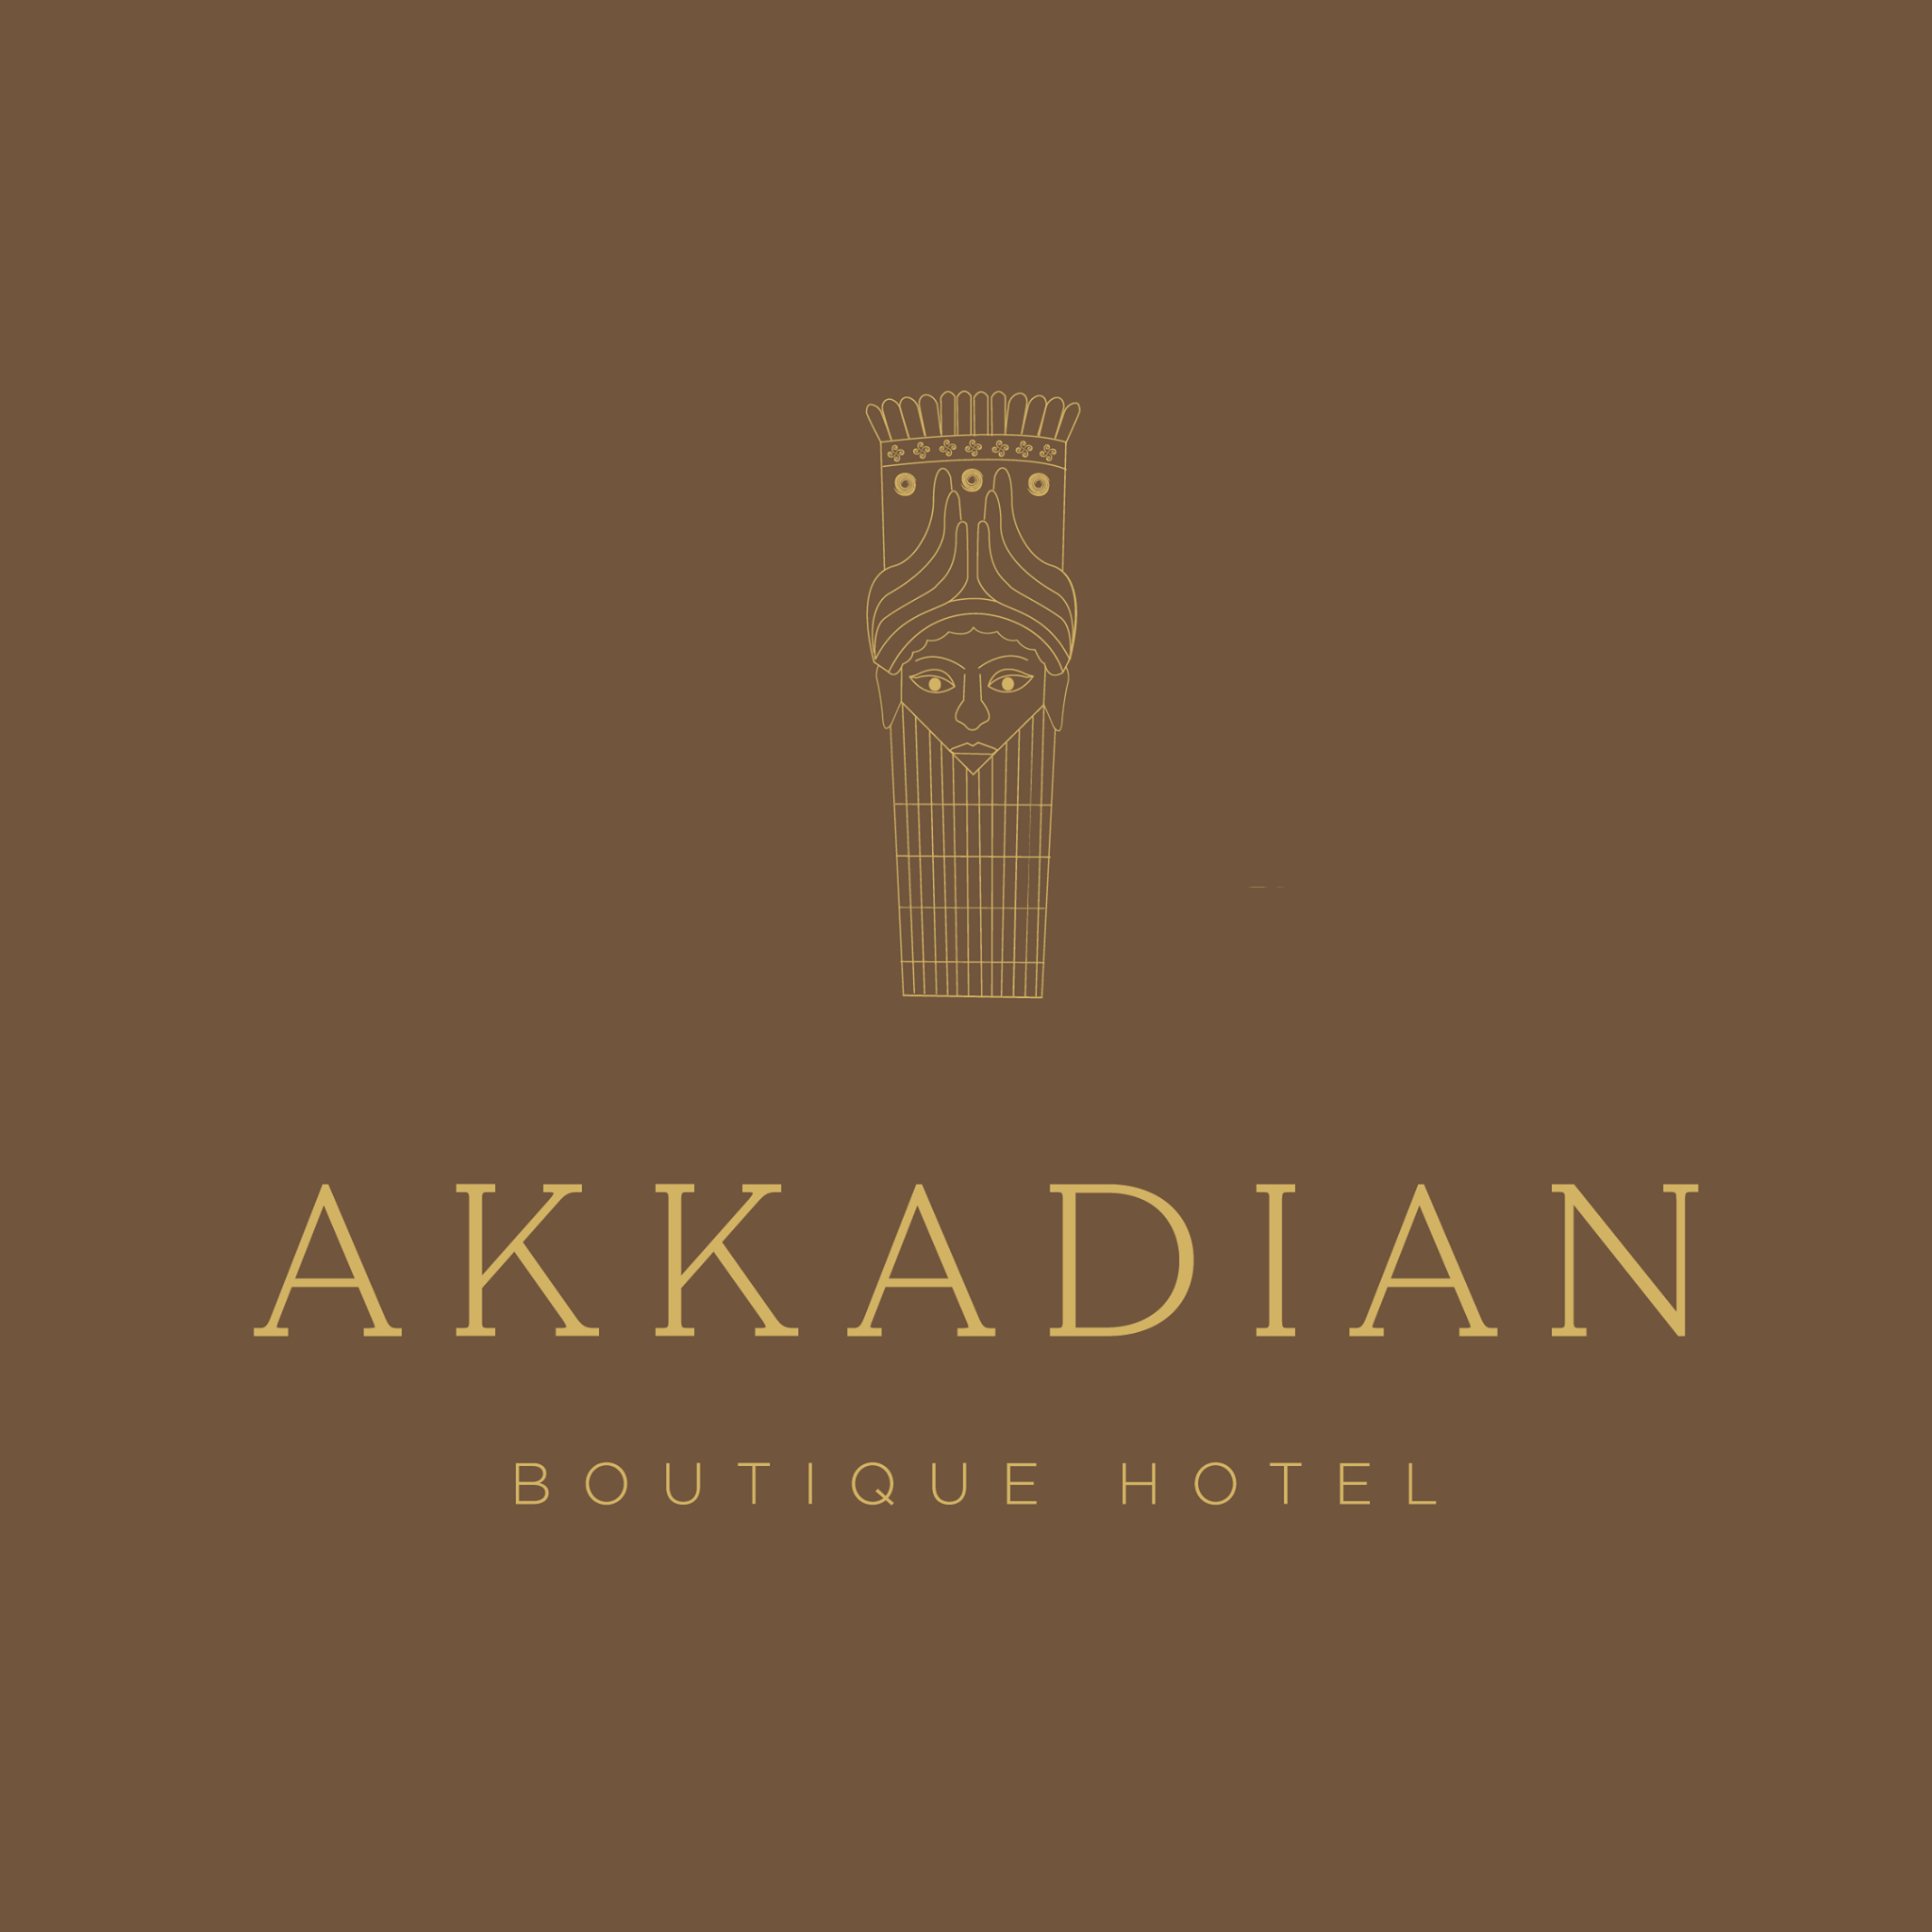 Akkadian Boutique Hotel